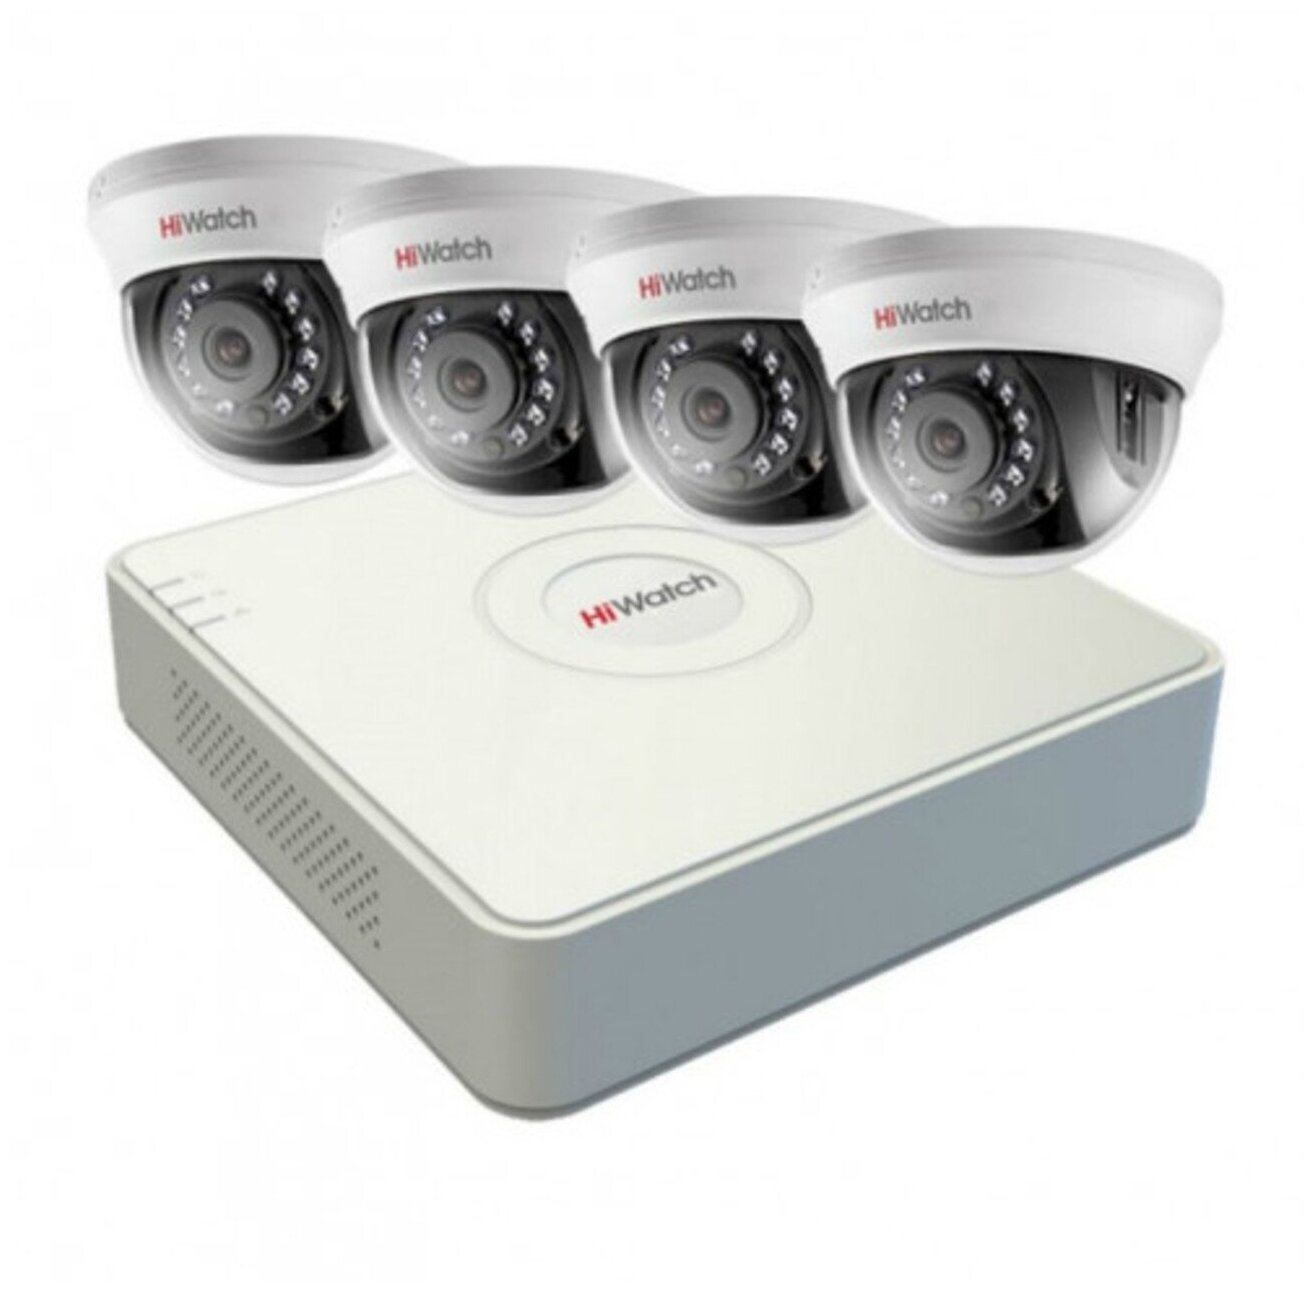 Комплект видеонаблюдения hiwatch на 4 внутренние камеры HD комплект видеонаблюдения falcon fe 104mhd kit офис smart